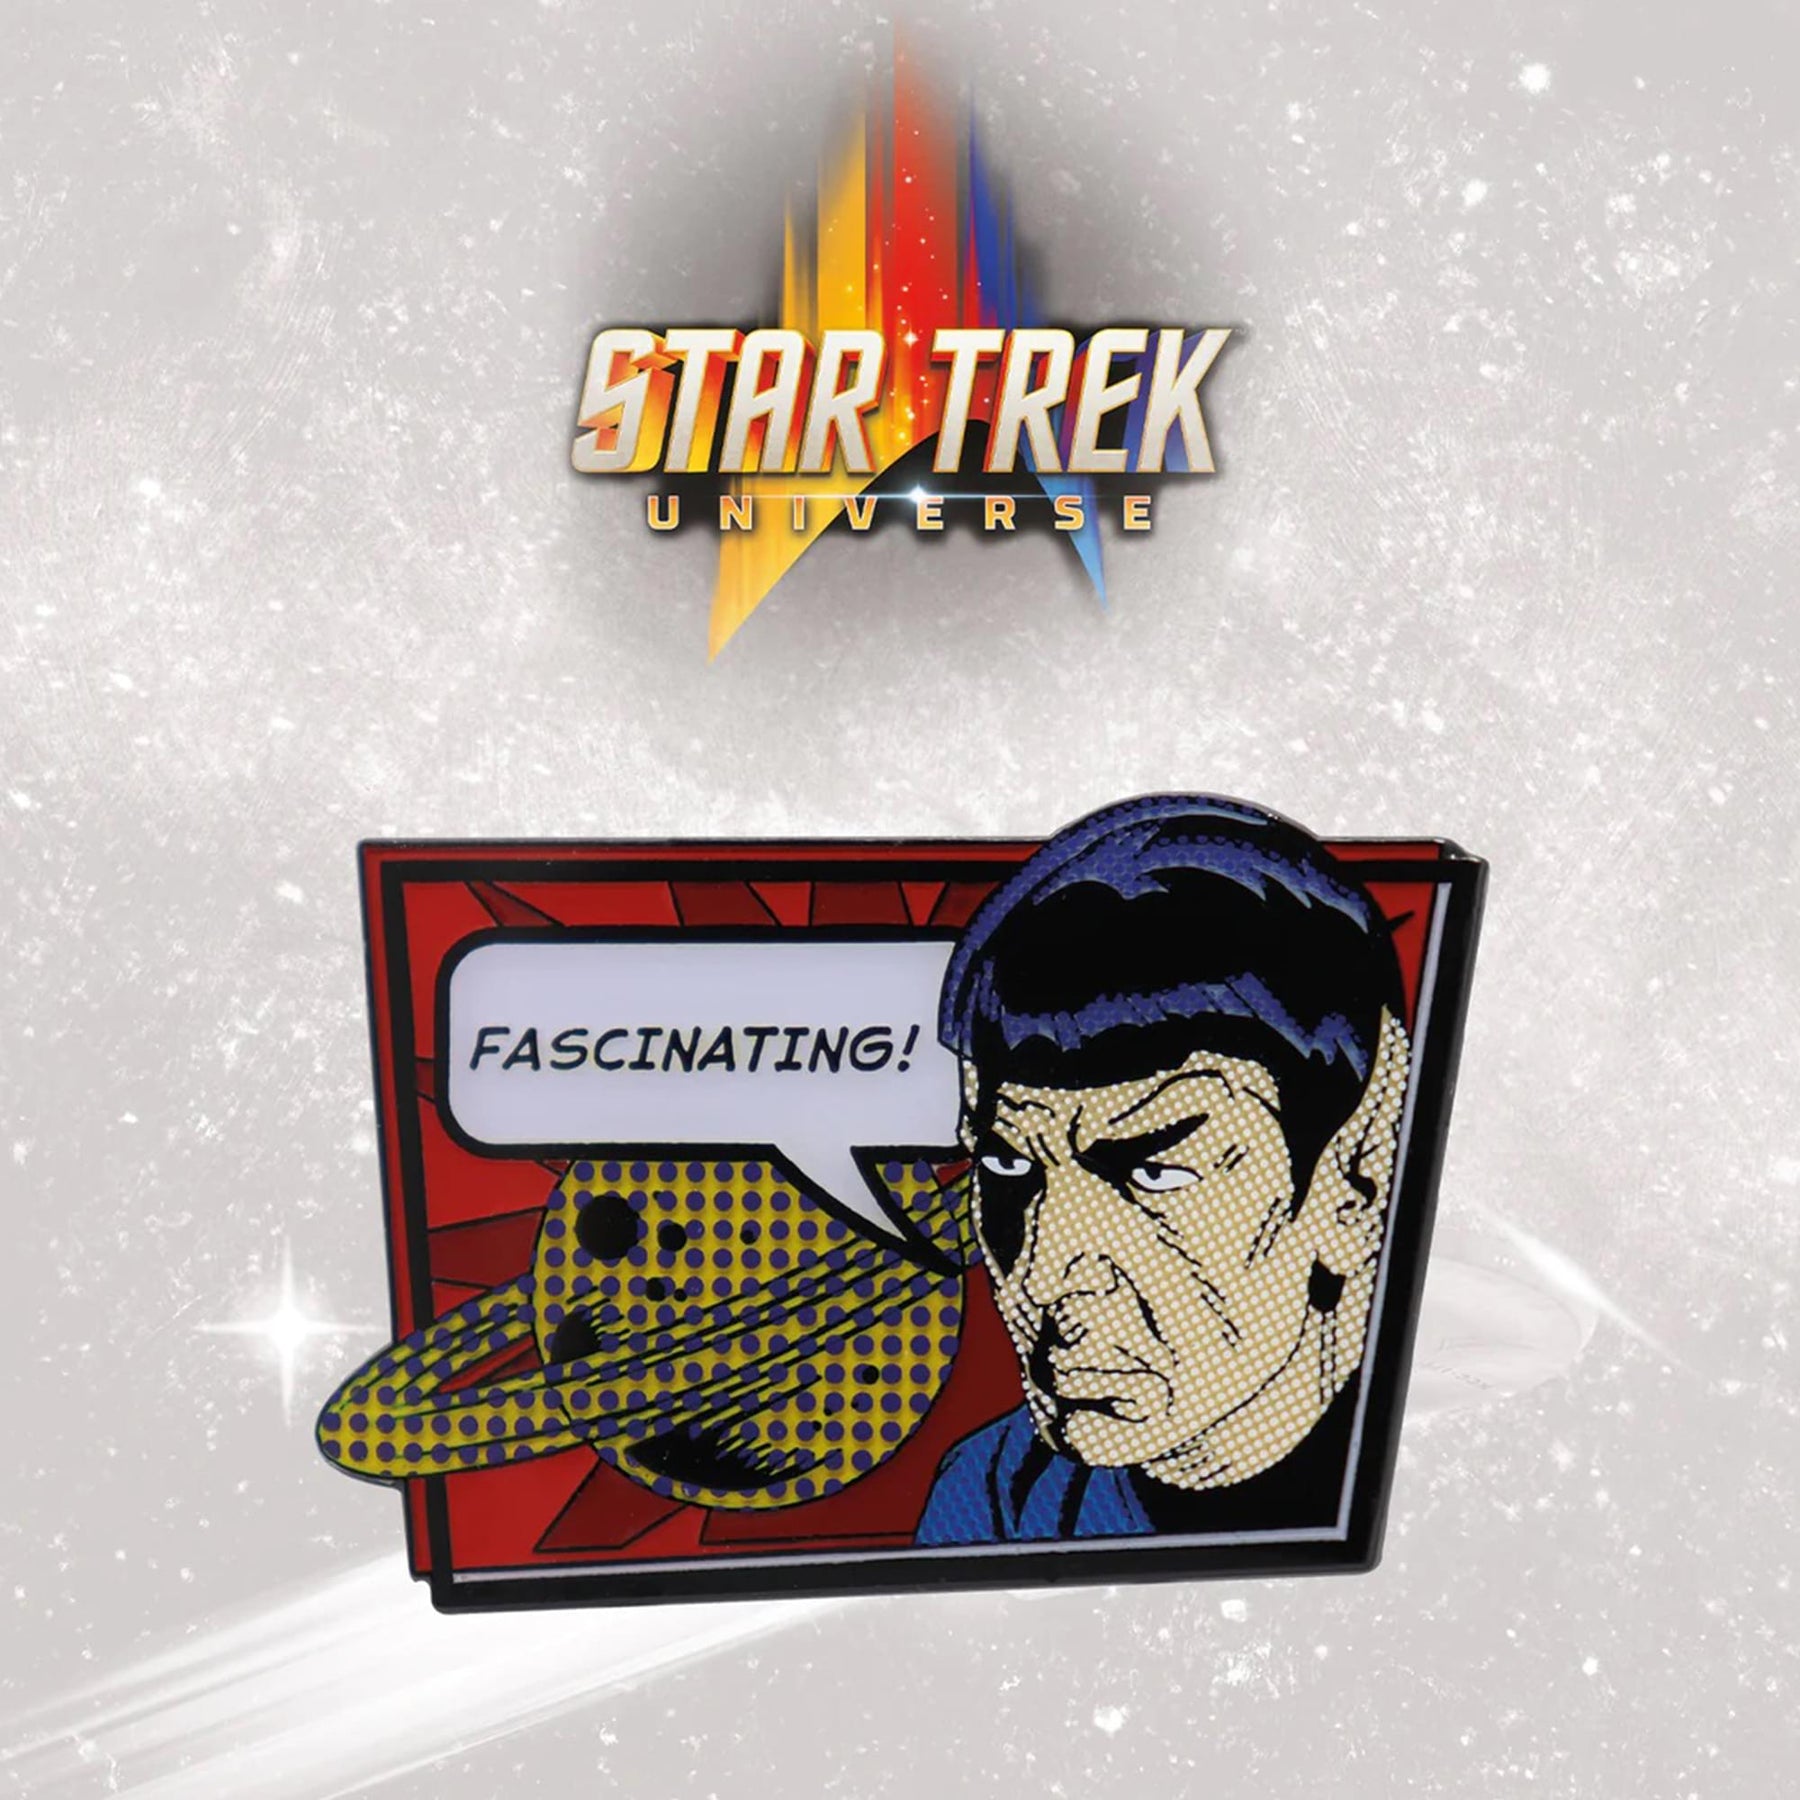 Star Trek Limited Edition Spock Pin Badge